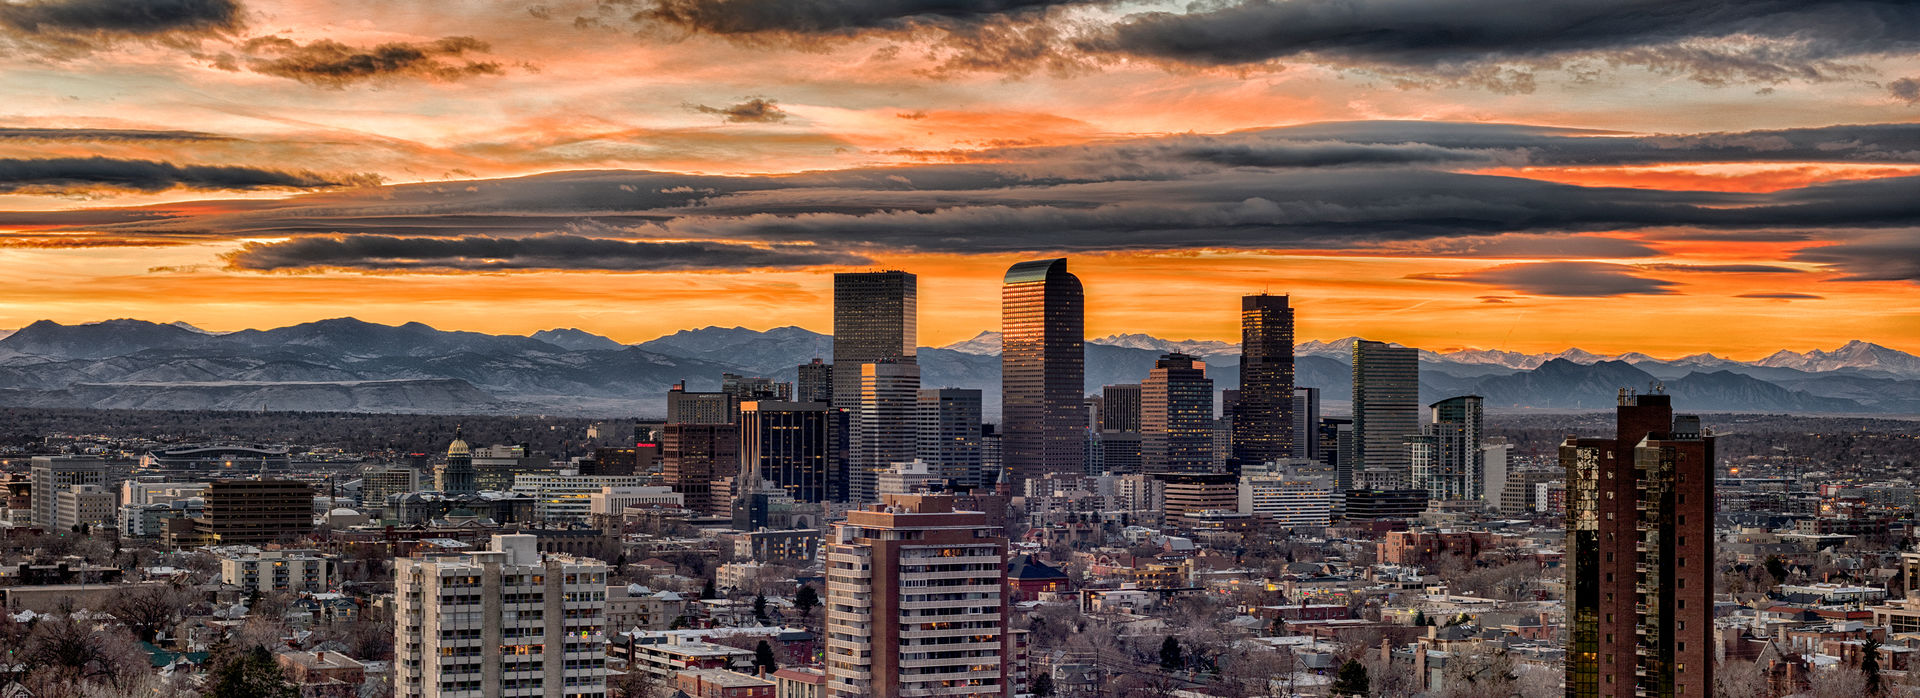 Denver: The Mile High City